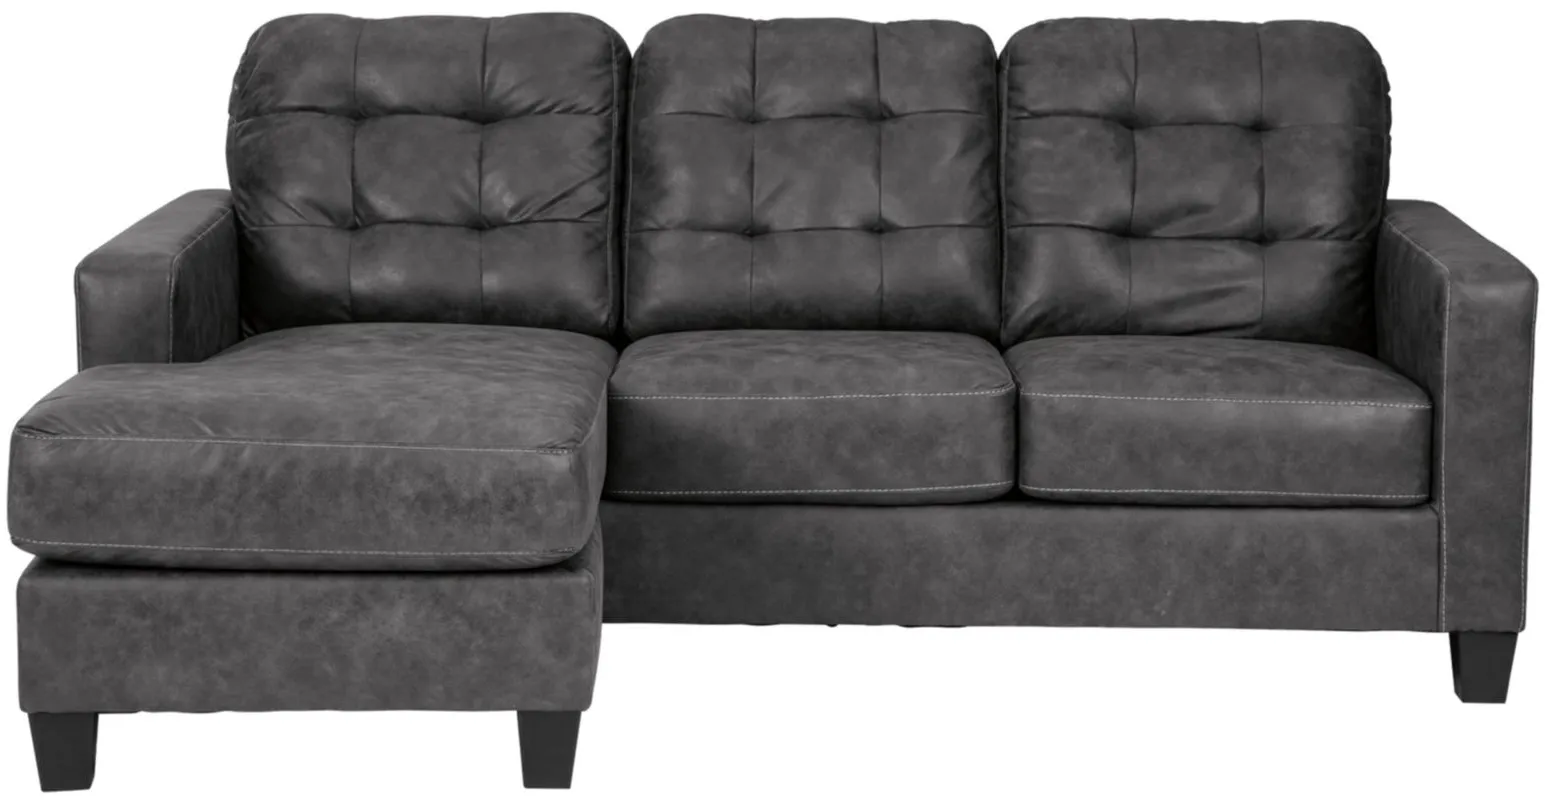 Venaldi Sofa Chaise in Gunmetal by Ashley Furniture